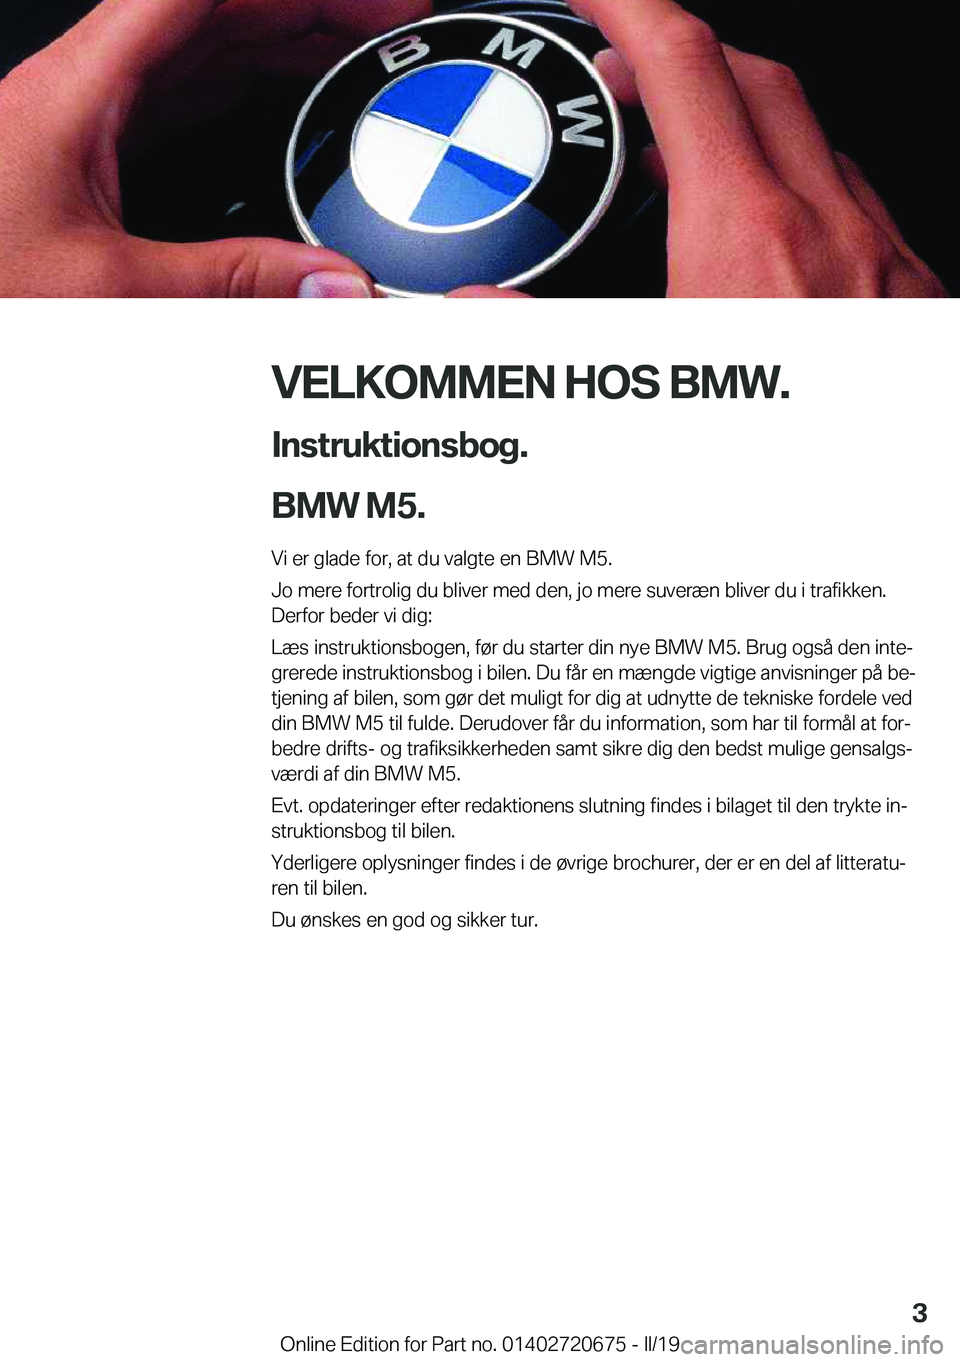 BMW M5 2019  InstruktionsbØger (in Danish) �V�E�L�K�O�M�M�E�N��H�O�S��B�M�W�.
�I�n�s�t�r�u�k�t�i�o�n�s�b�o�g�.
�B�M�W��M�5�. �V�i��e�r��g�l�a�d�e��f�o�r�,��a�t��d�u��v�a�l�g�t�e��e�n��B�M�W��M�5�.
�J�o��m�e�r�e��f�o�r�t�r�o�l�i�g